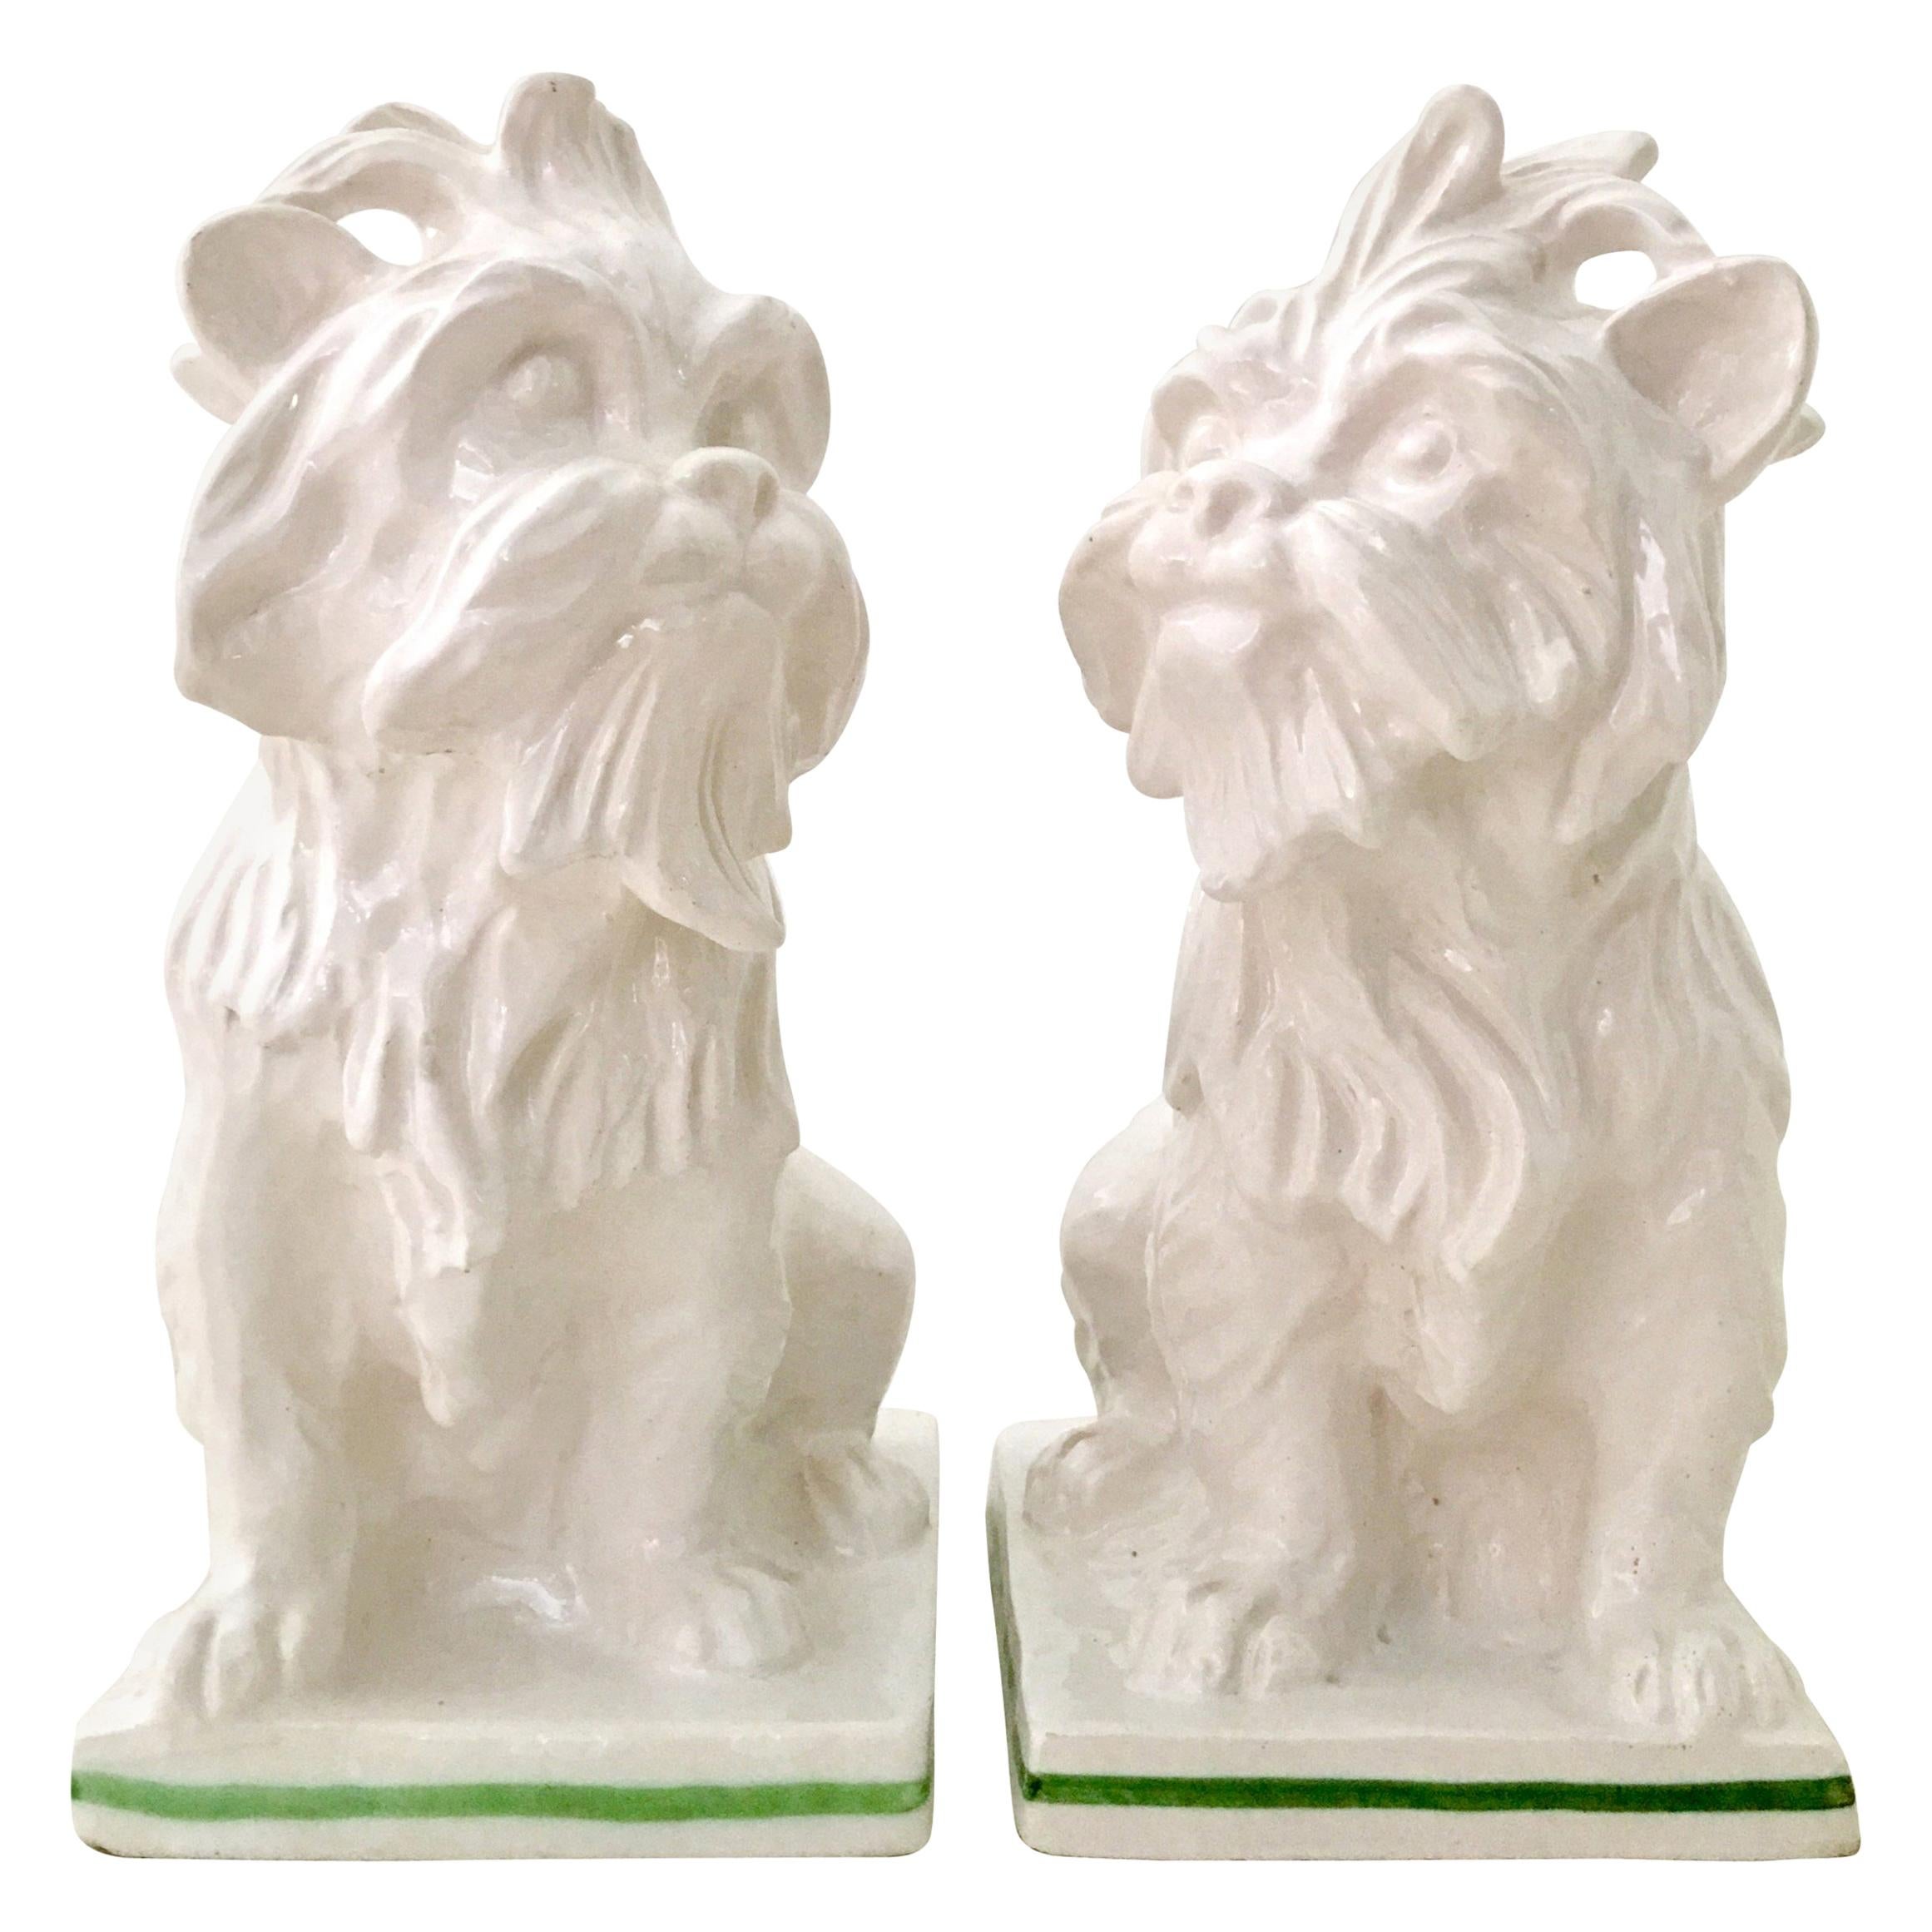 Midcentury Italian Pair of Staffordshire Style Ceramic Terrier Dog Sculptures